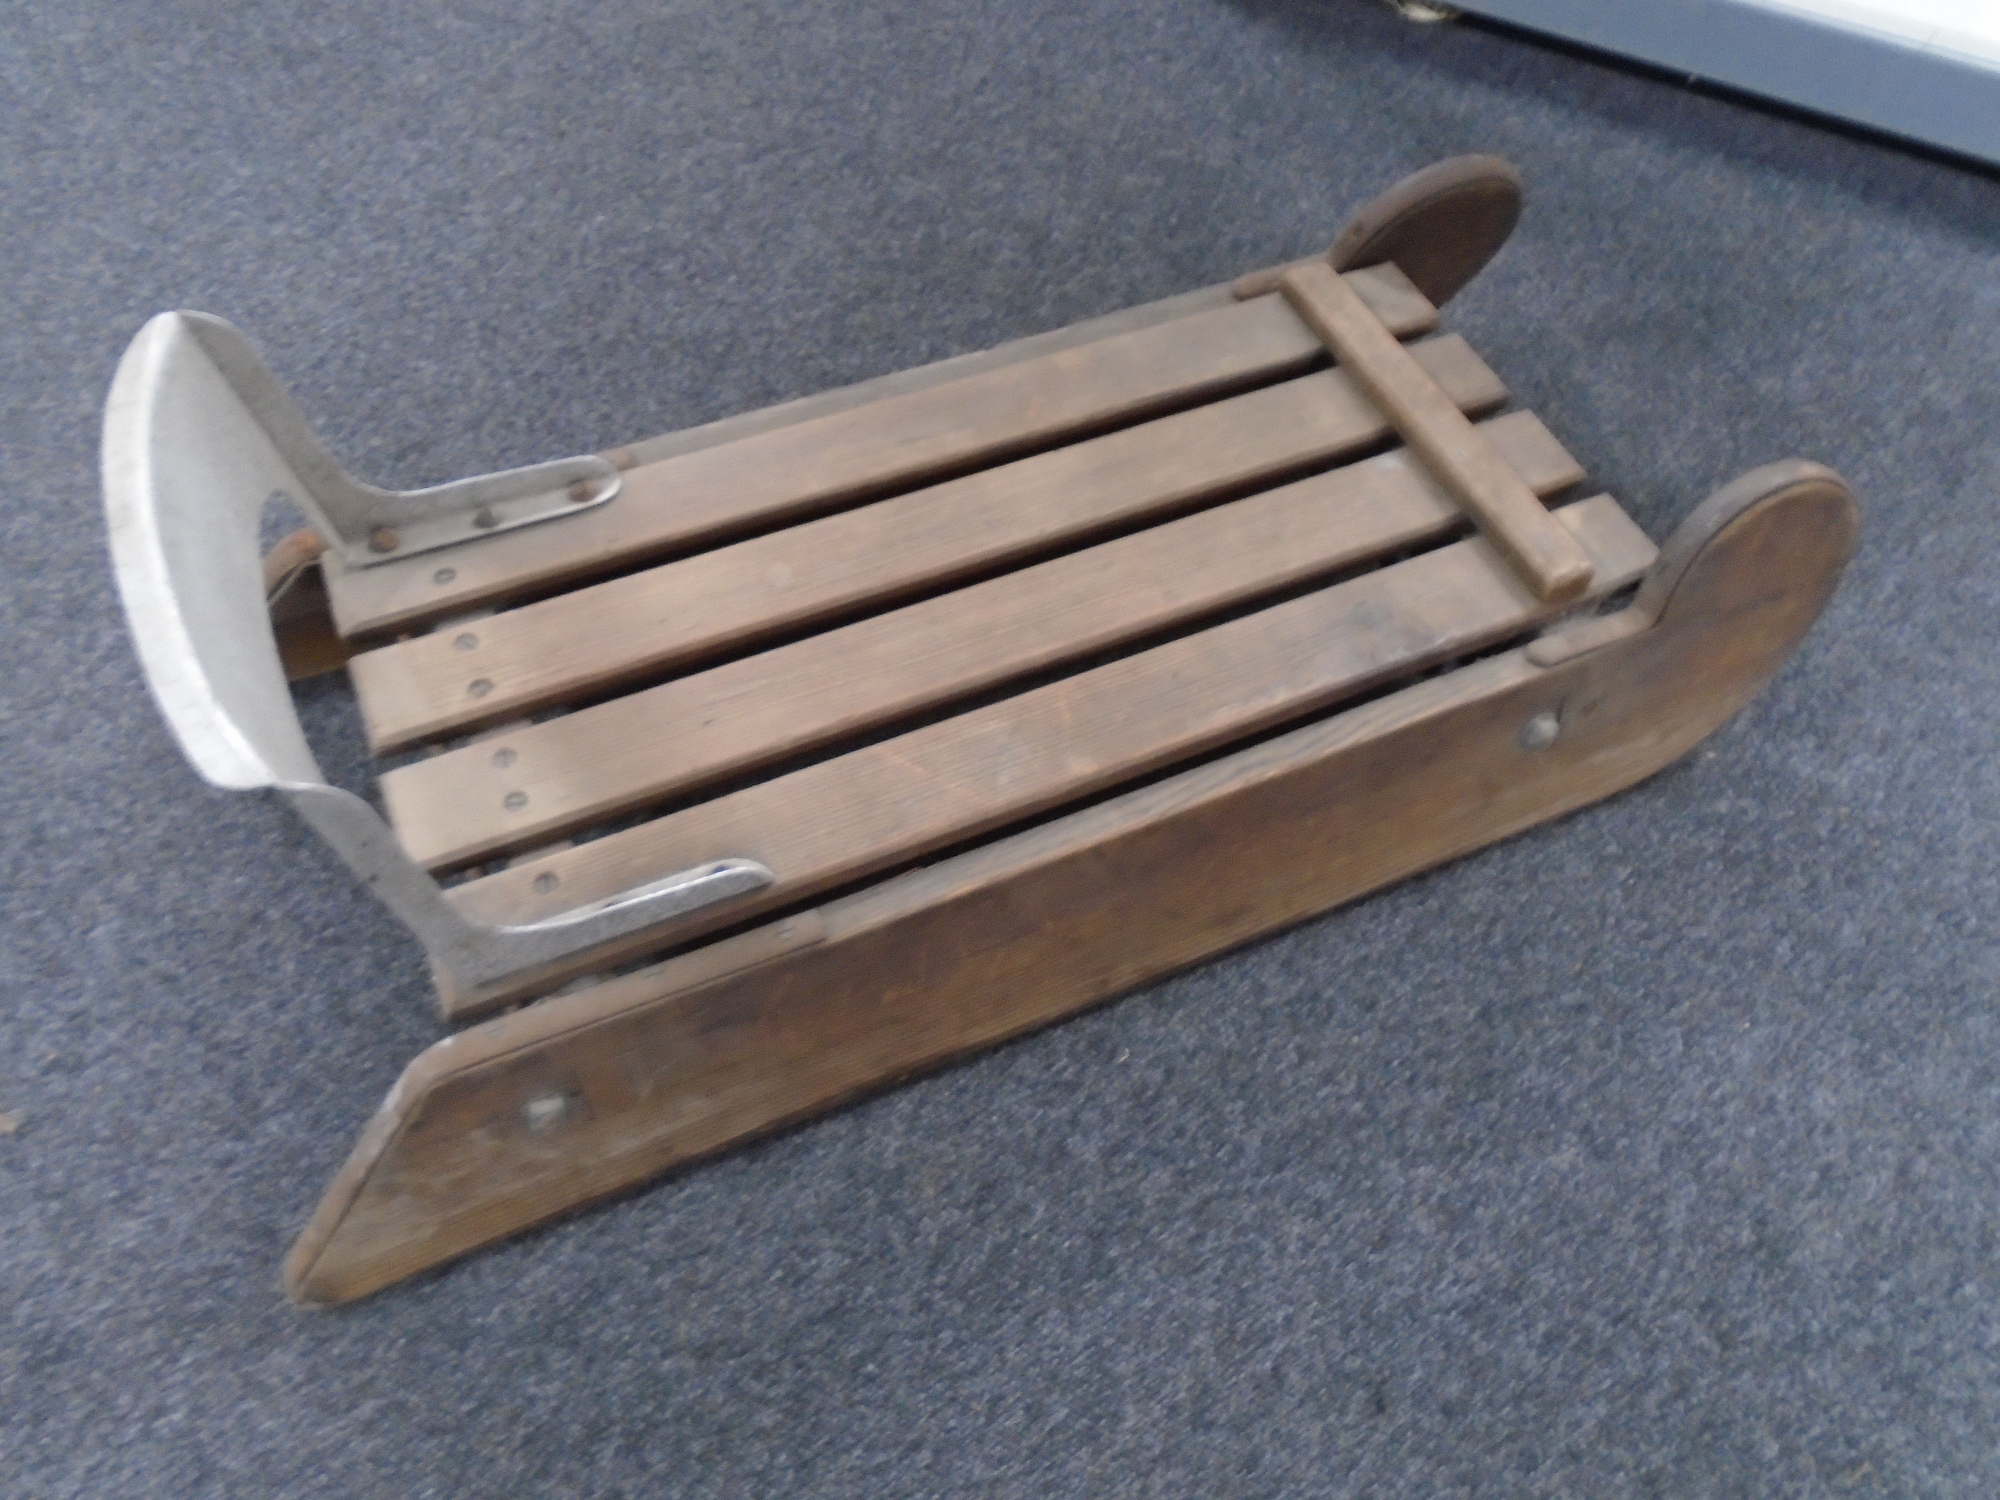 A wood and metal sledge.